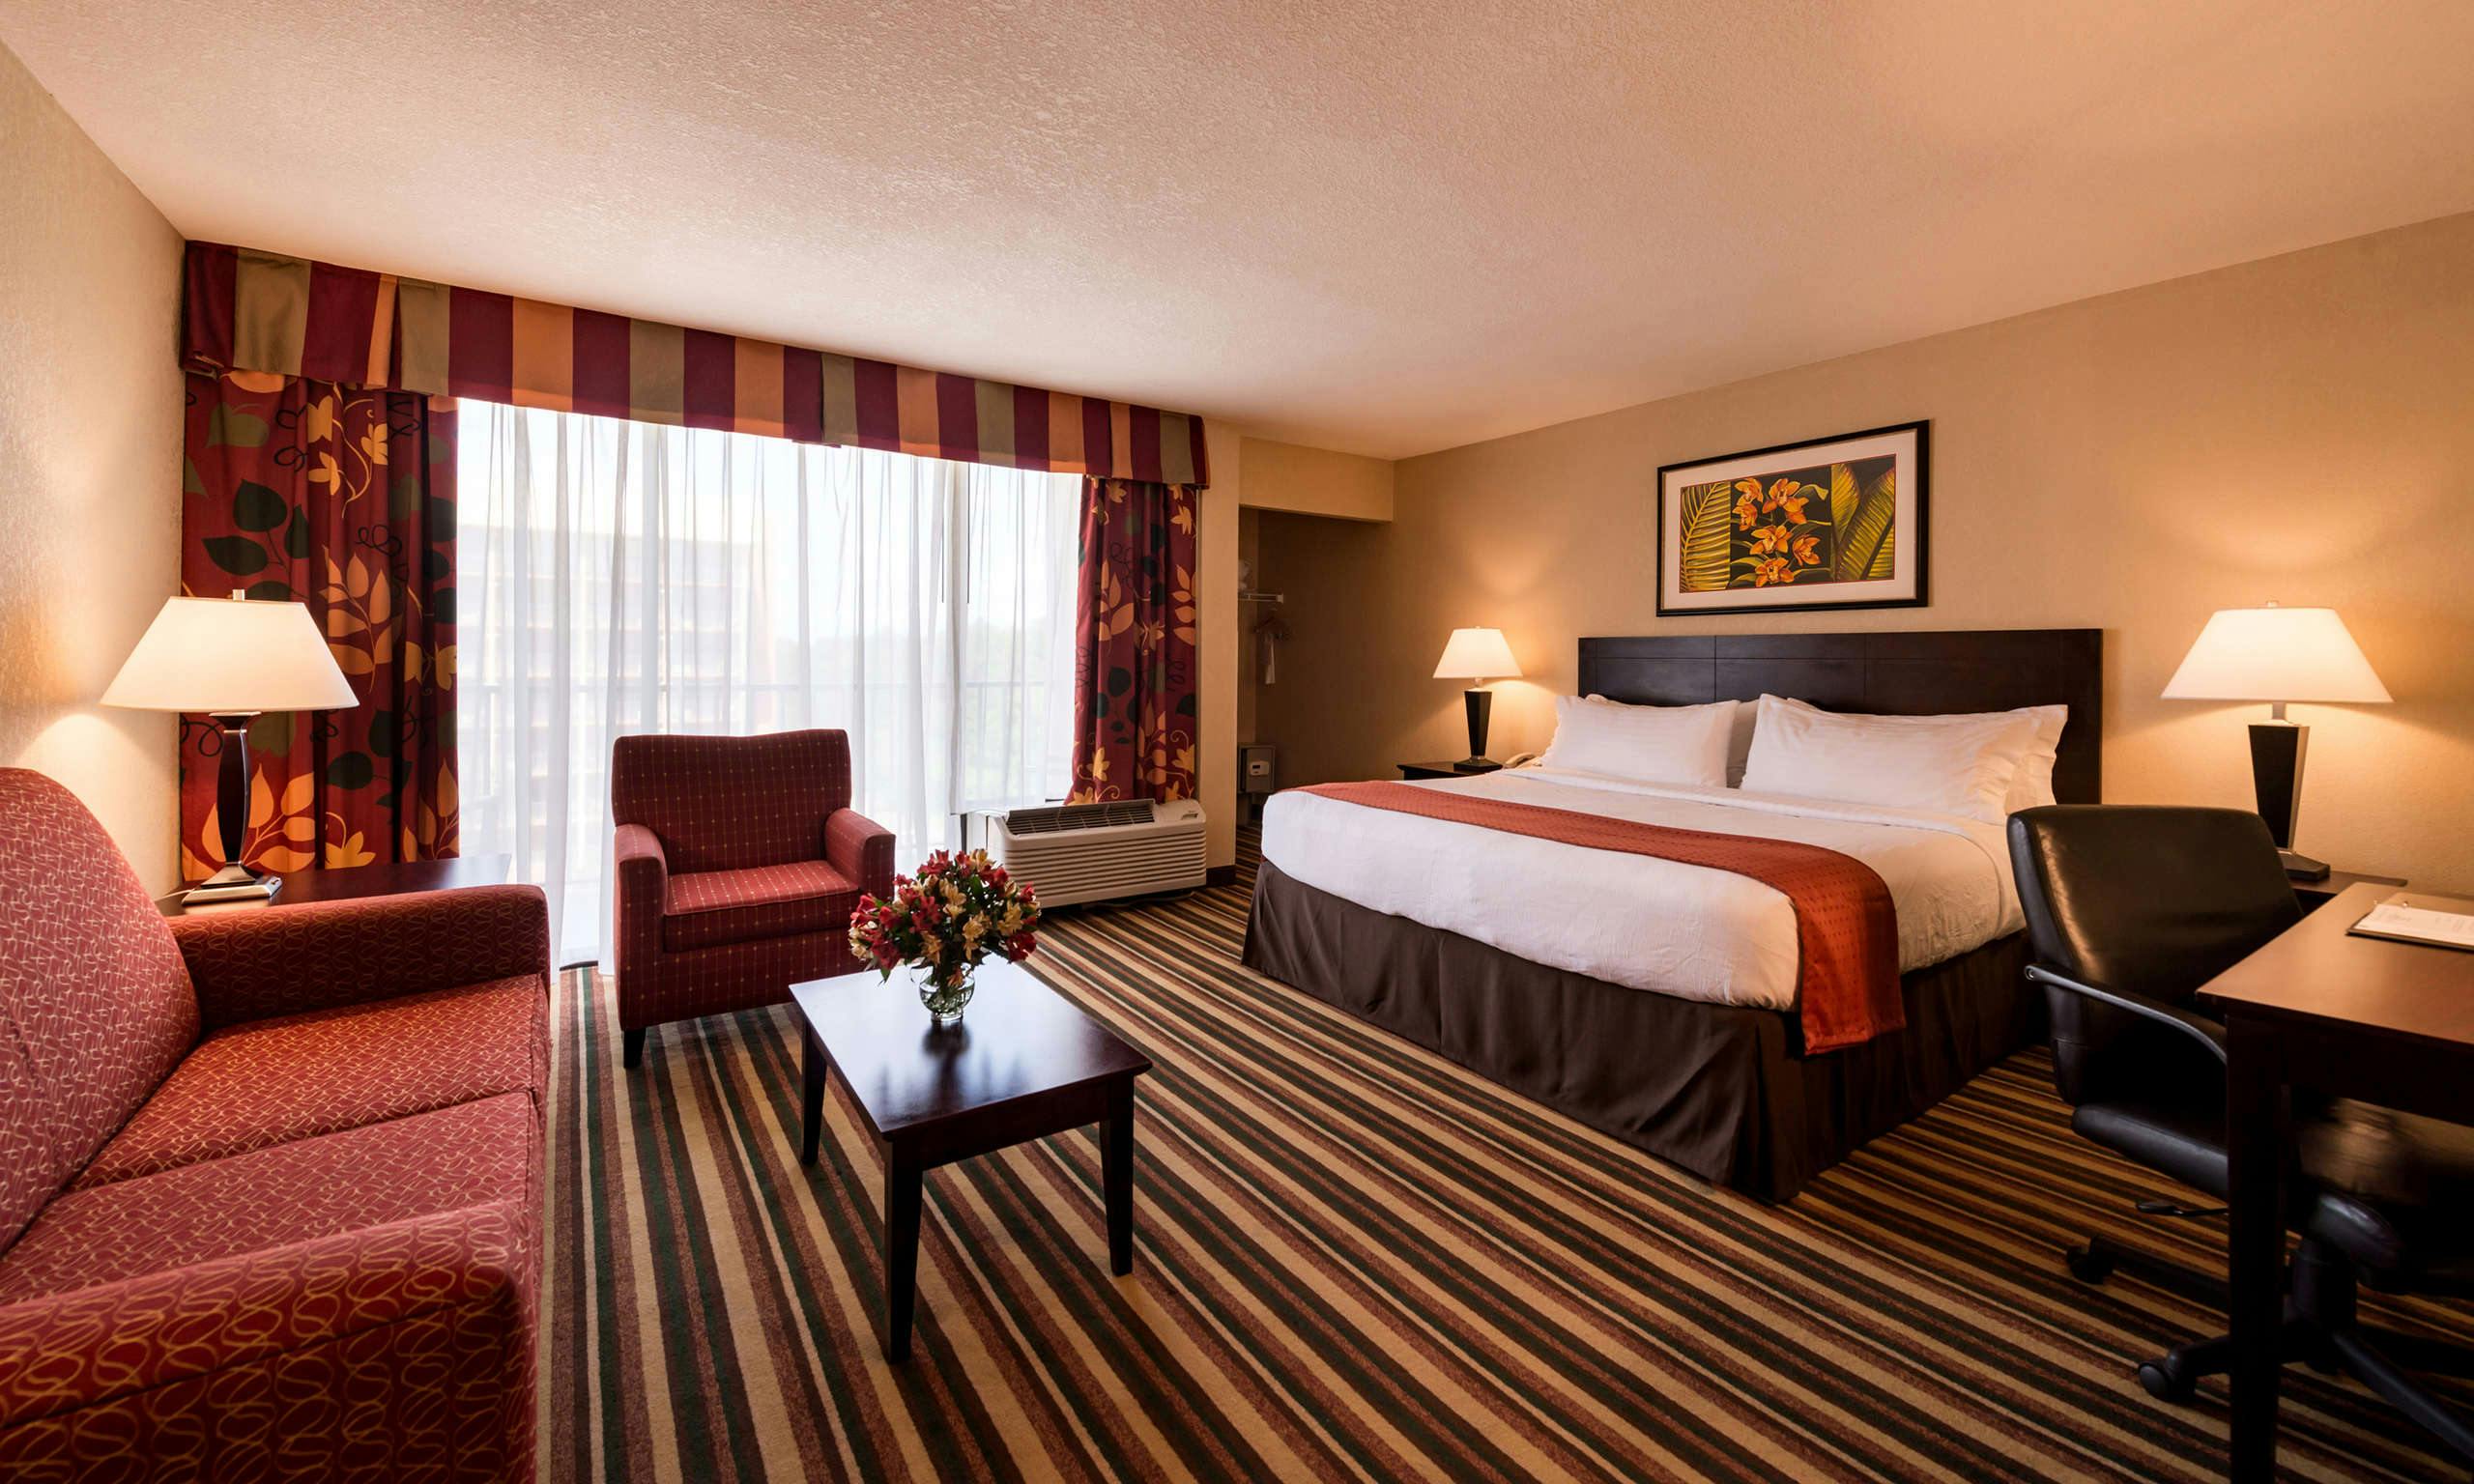  Holiday Inn Orlando Southwest–Celebration Area bedroom suite